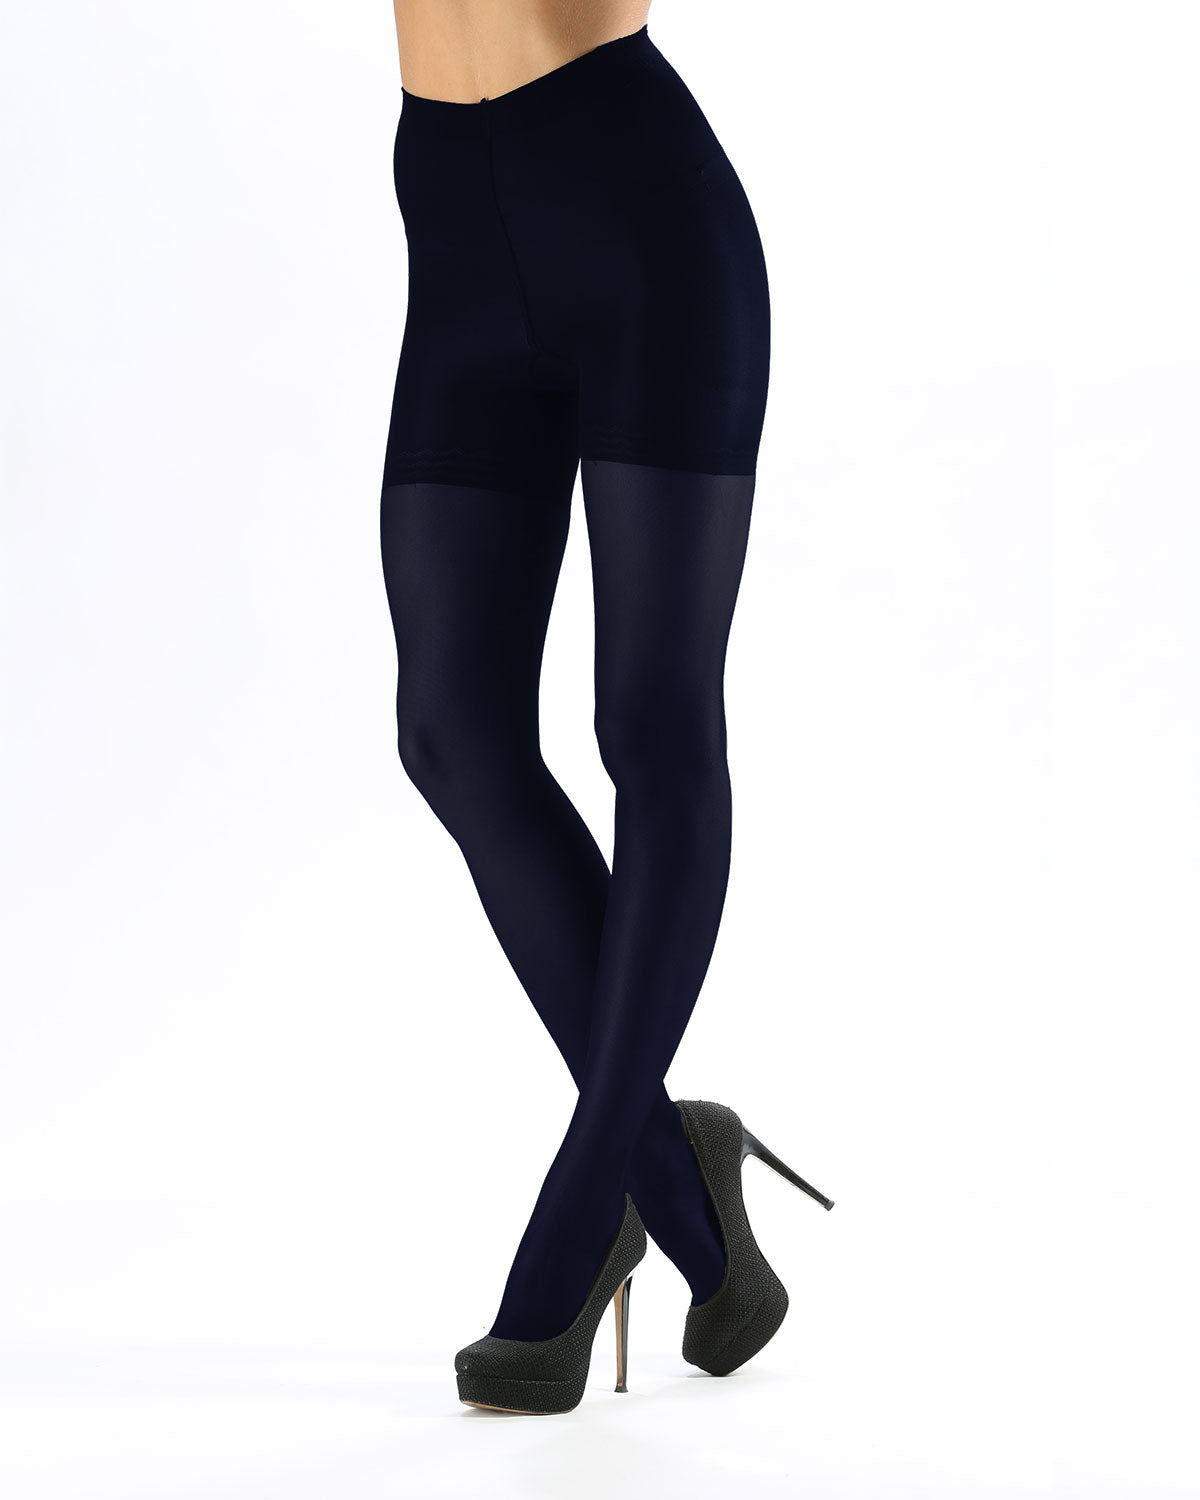 Levante Body Slim 40 Denier Women's Tights Small / Moka | eBay